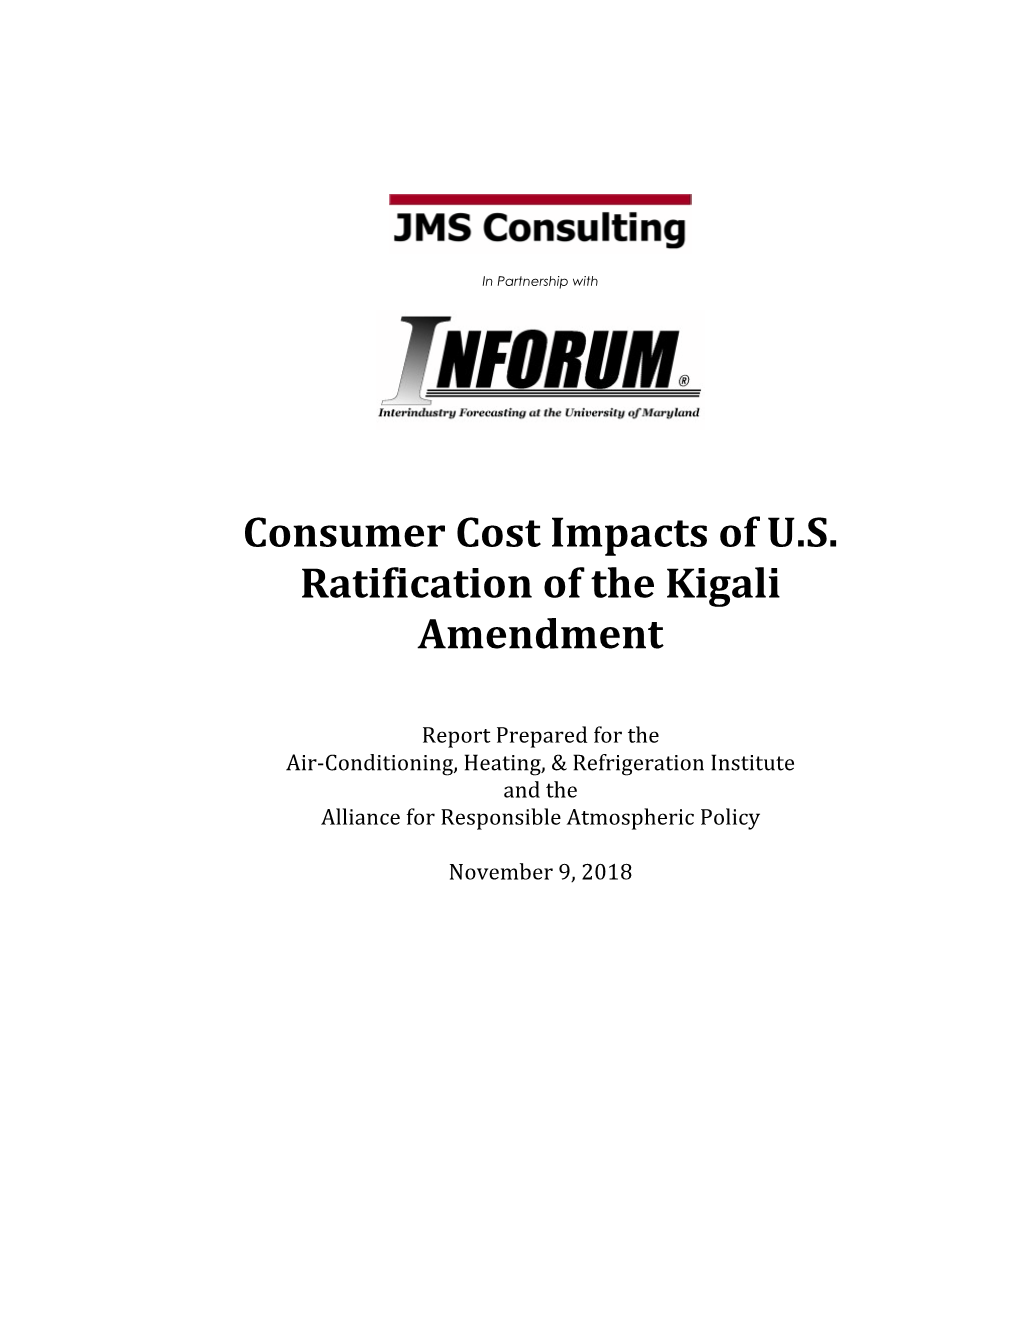 Consumer Cost Impacts of U.S. Ratification of the Kigali Amendment